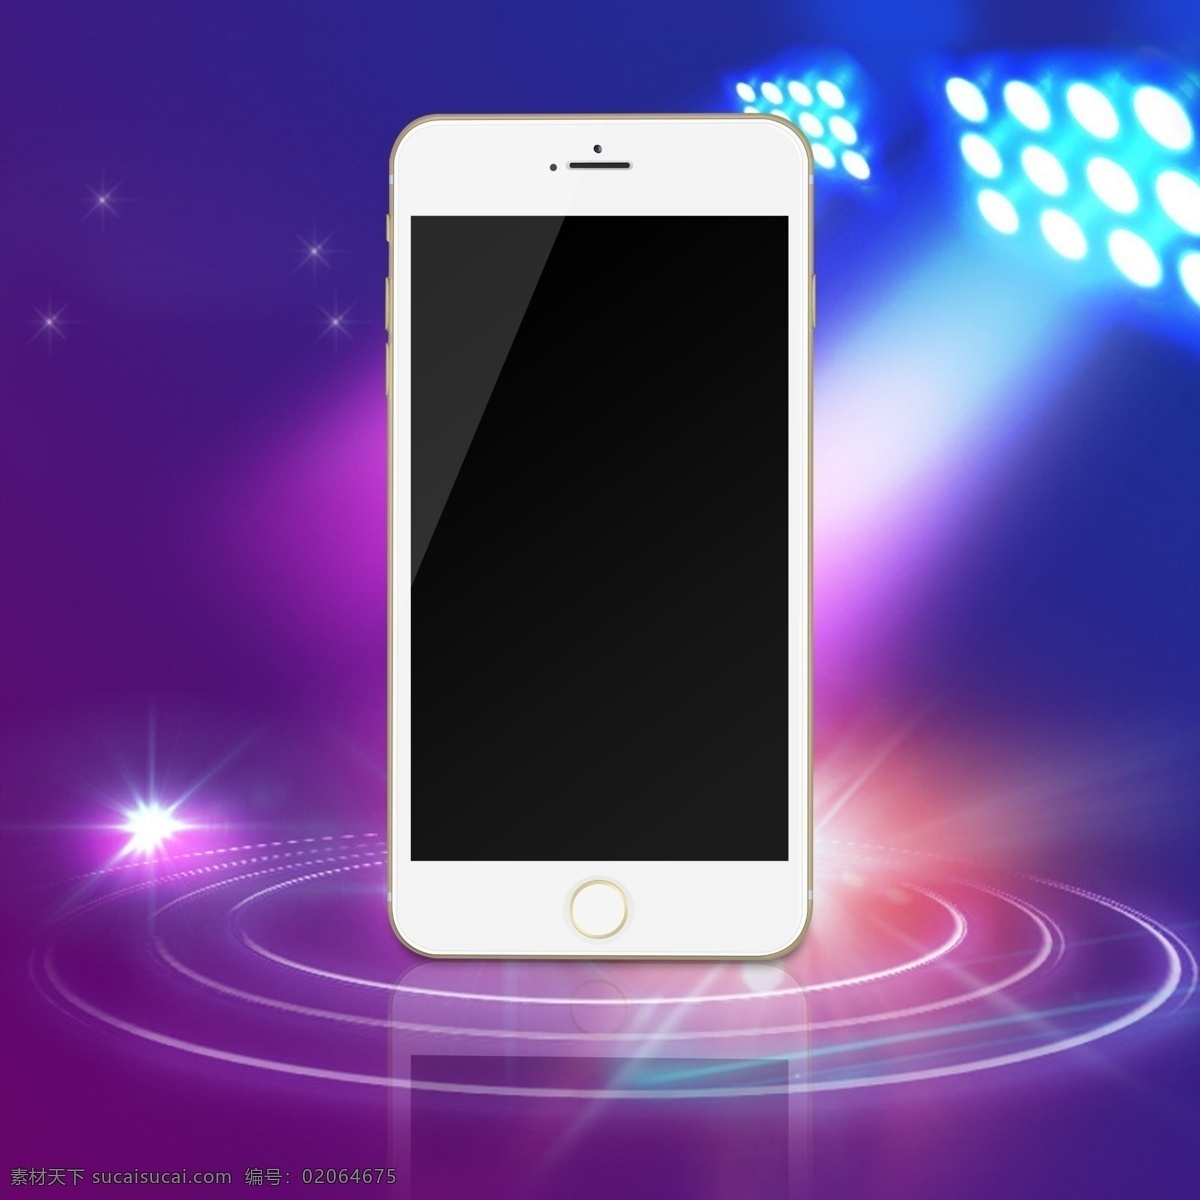 iphone6s 手机 分层 苹果手机 炫彩背景 手机正面